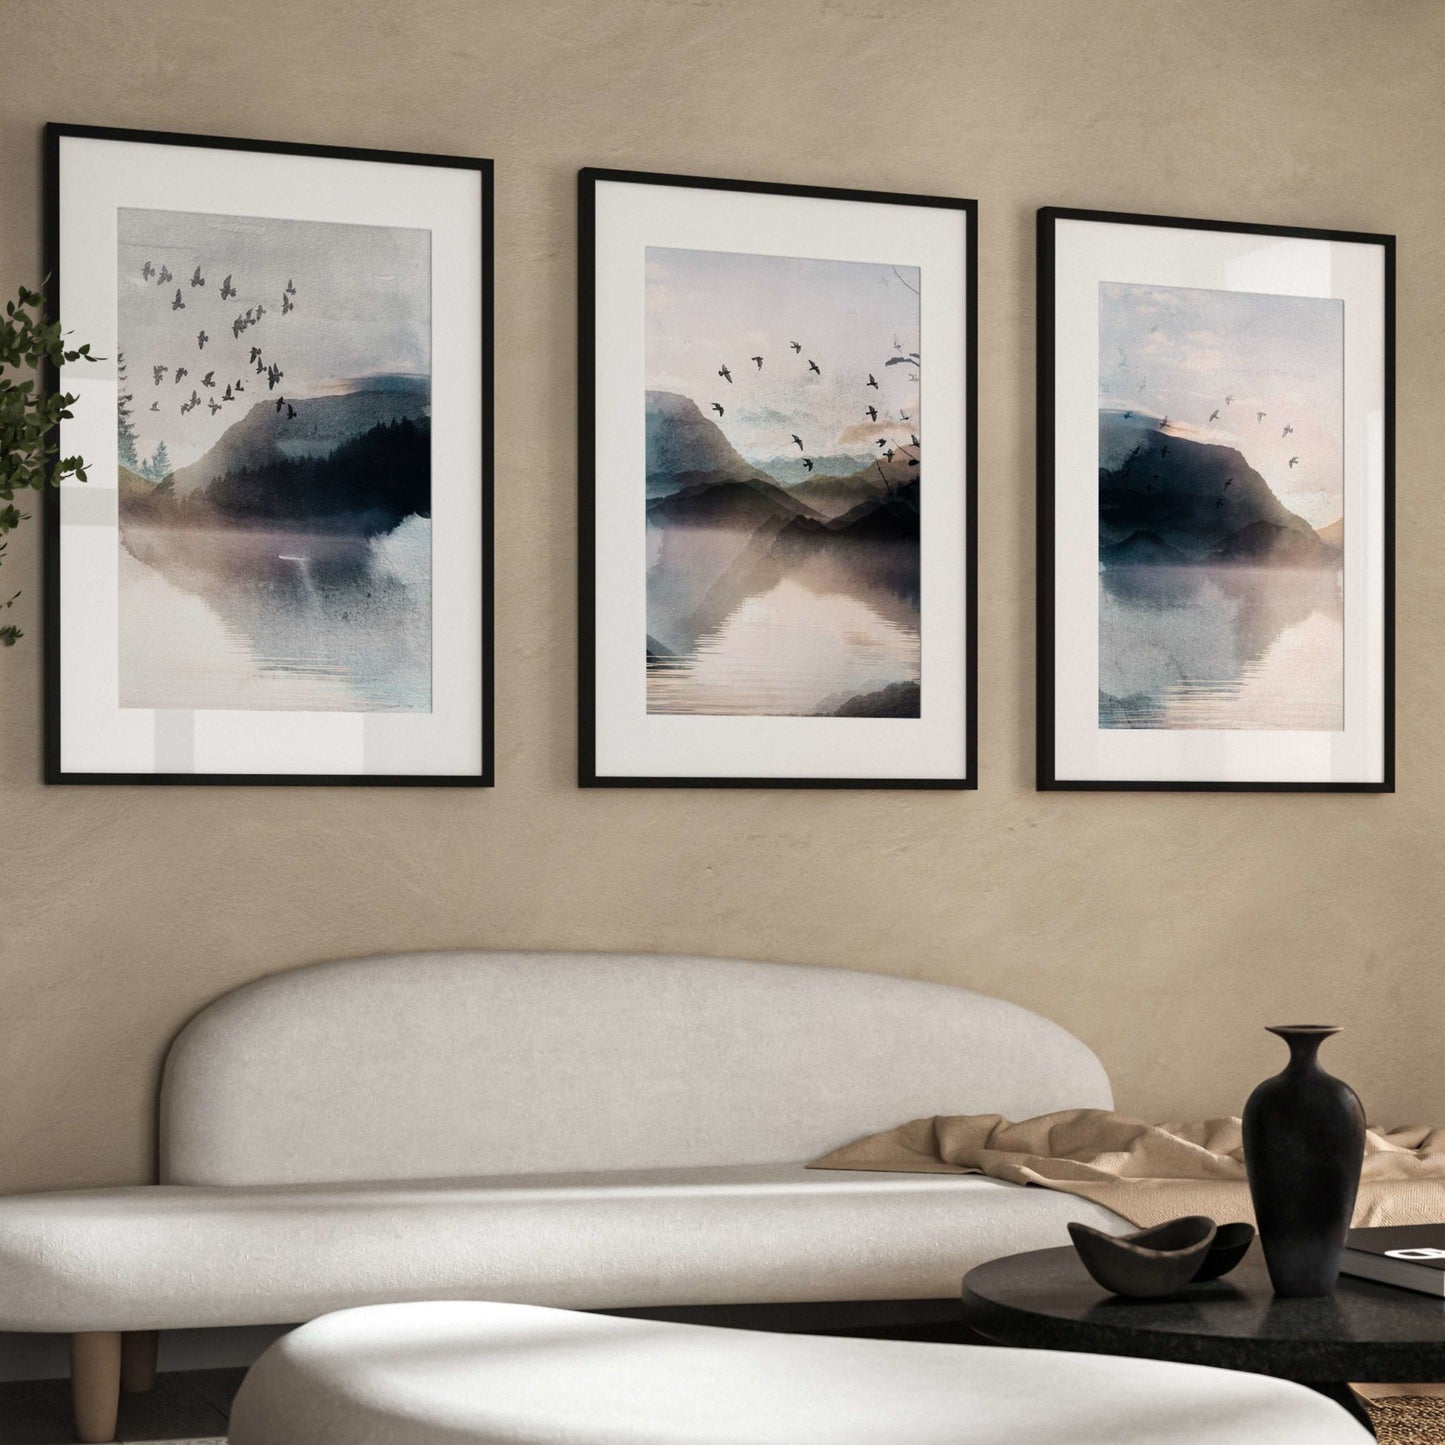 set of 3 triptych Landscape Wall art prints